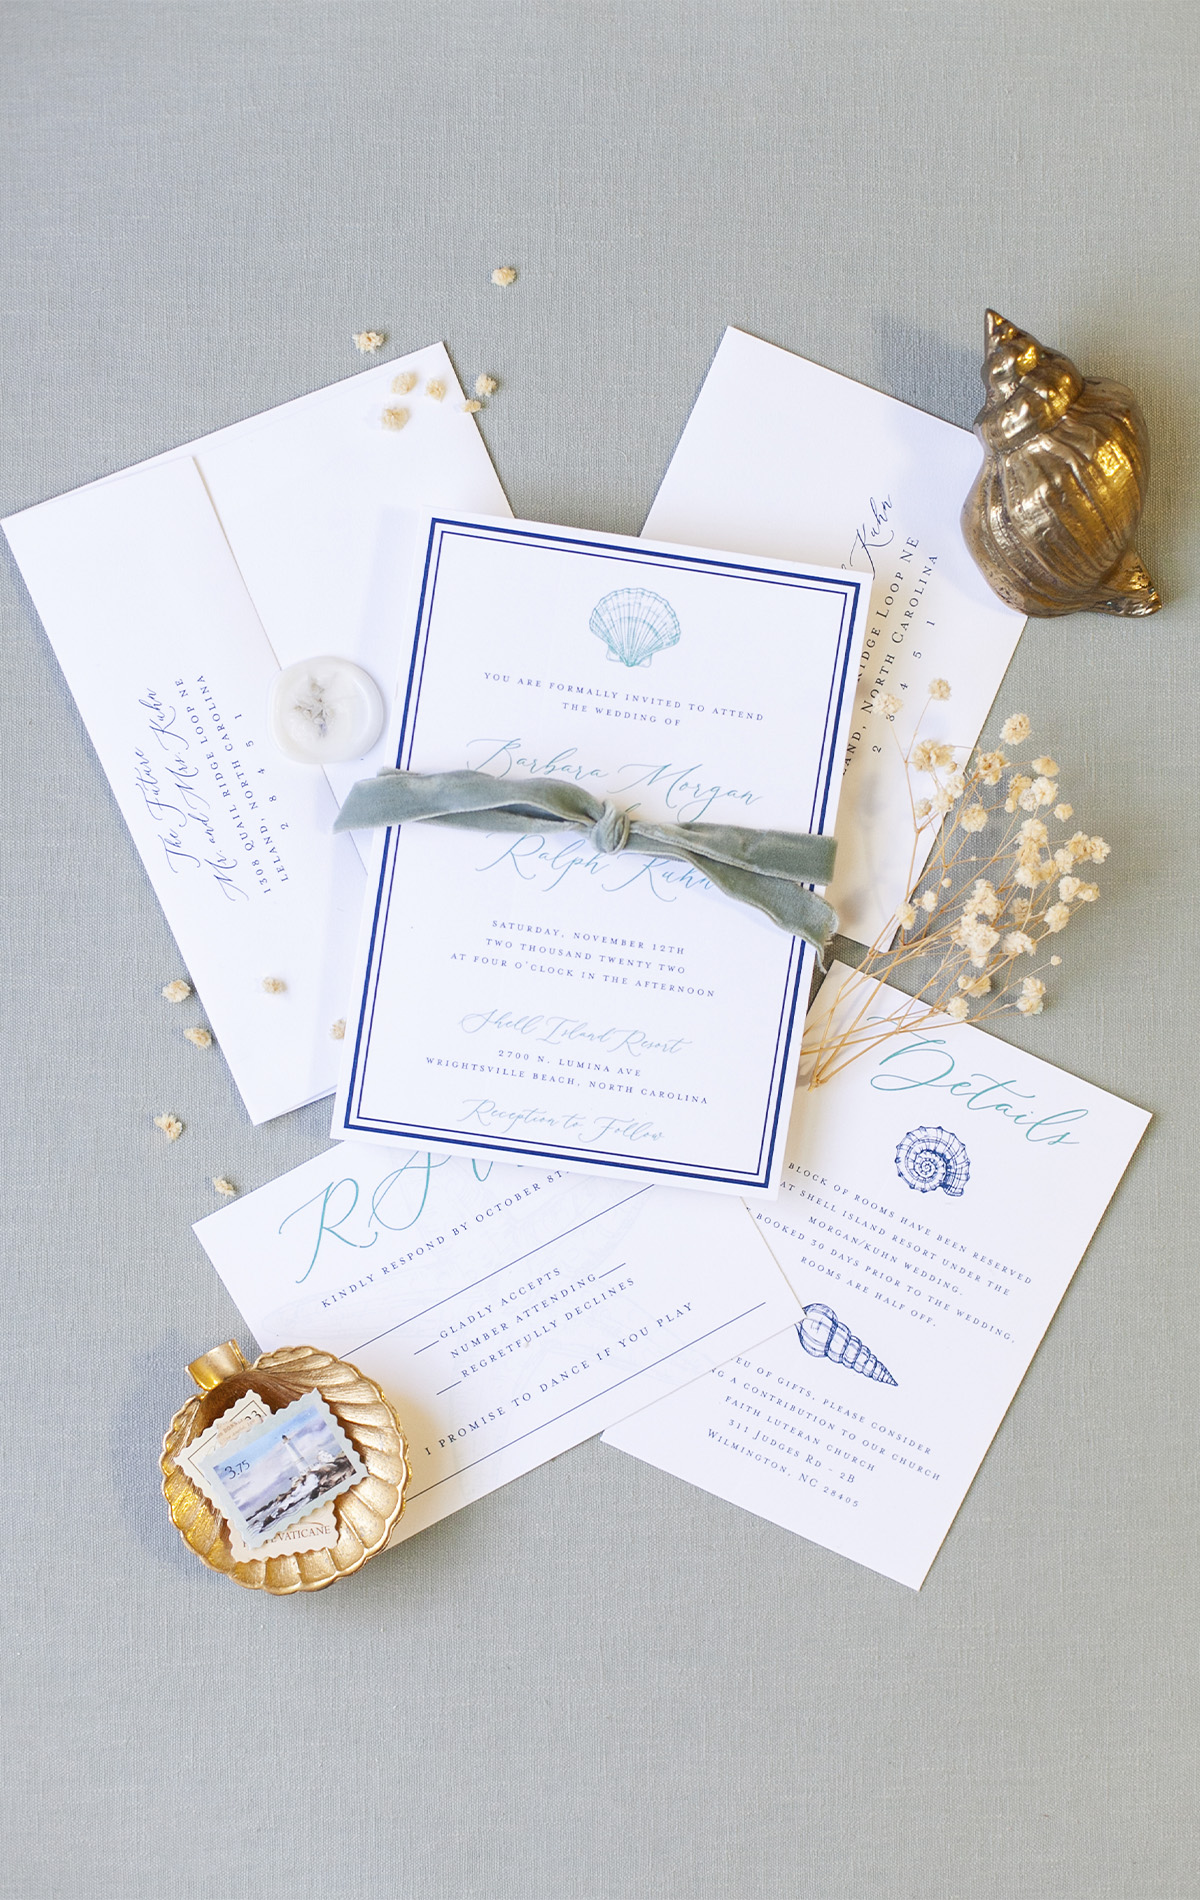 Alexis Scott - Home Website Slider Image - Nautical themed classic wedding invitations